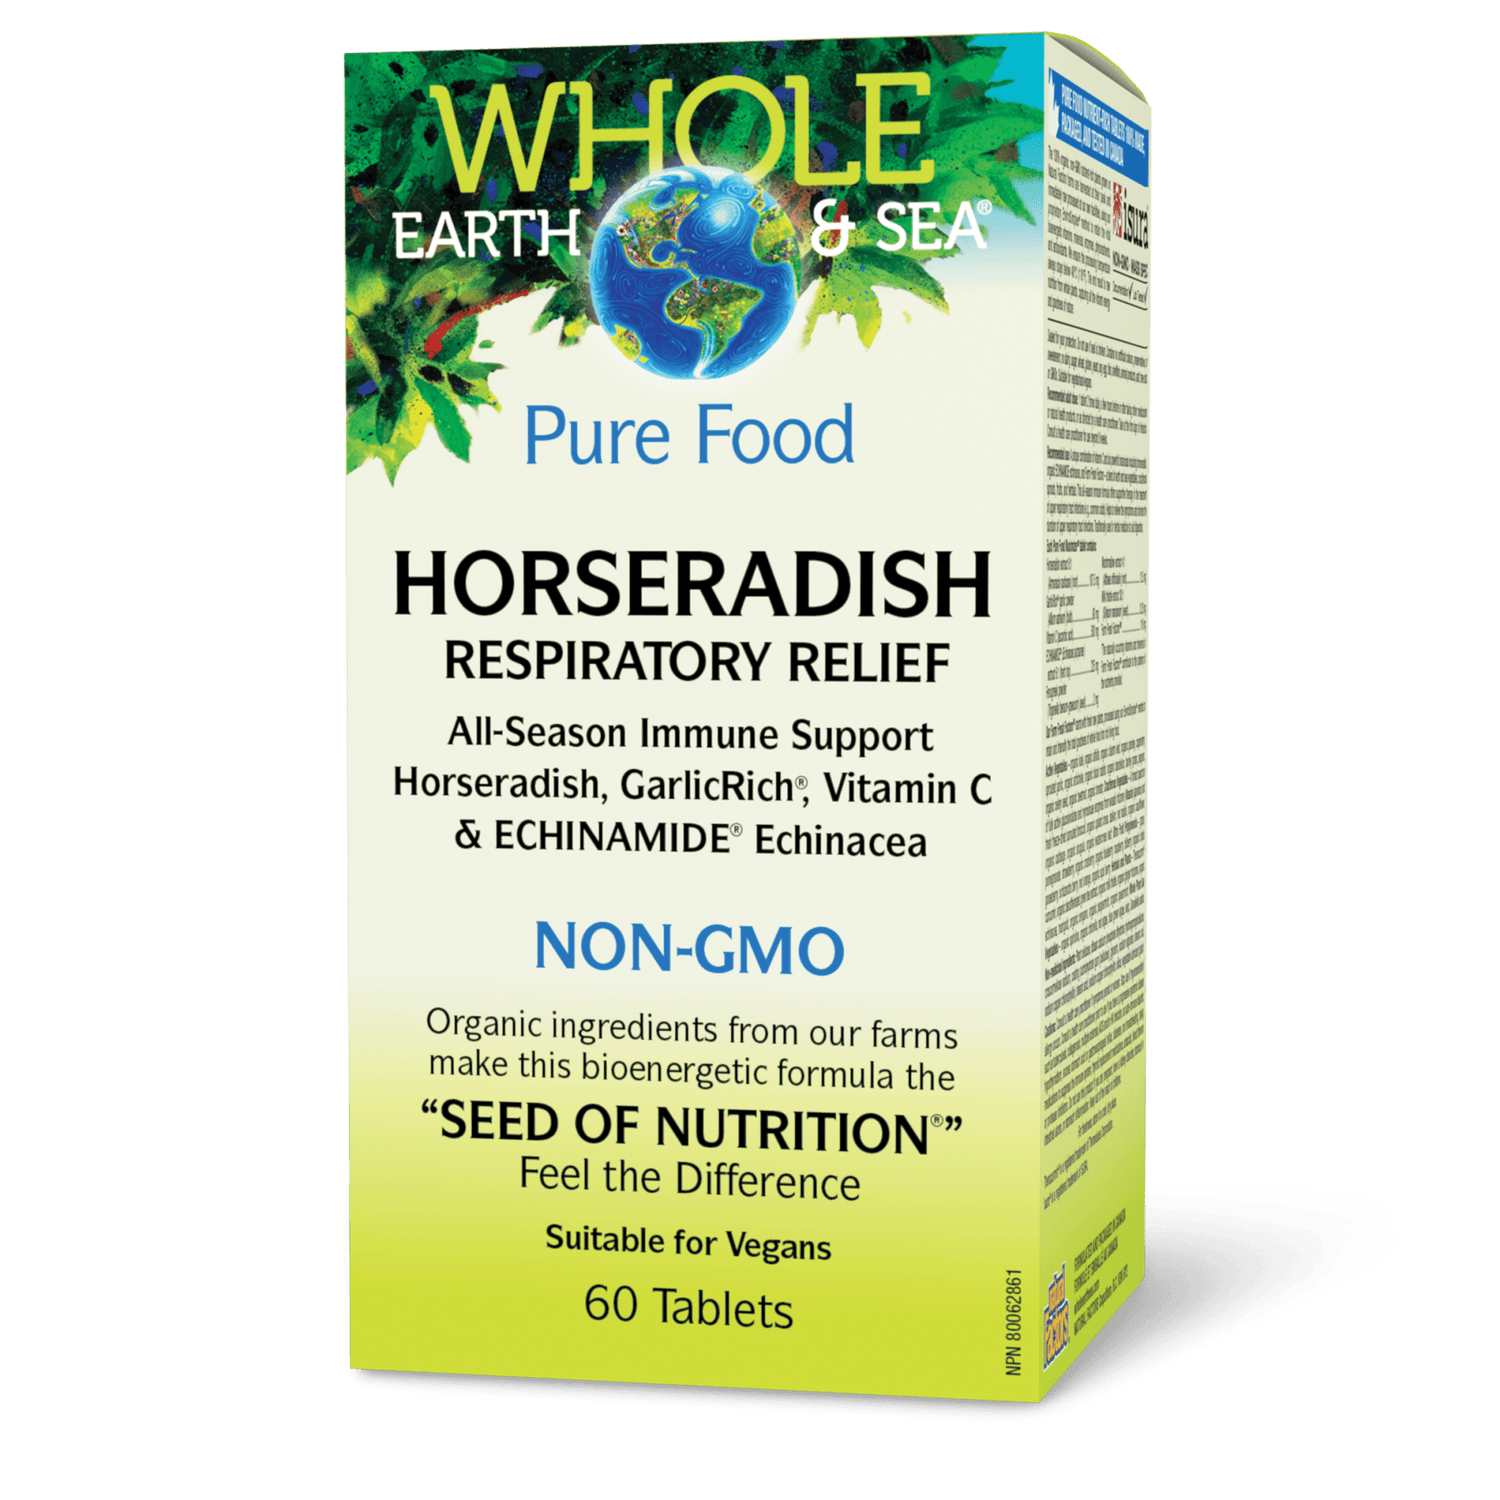 Horseradish Respiratory Relief, Whole Earth & Sea, Whole Earth & Sea®|v|image|35518